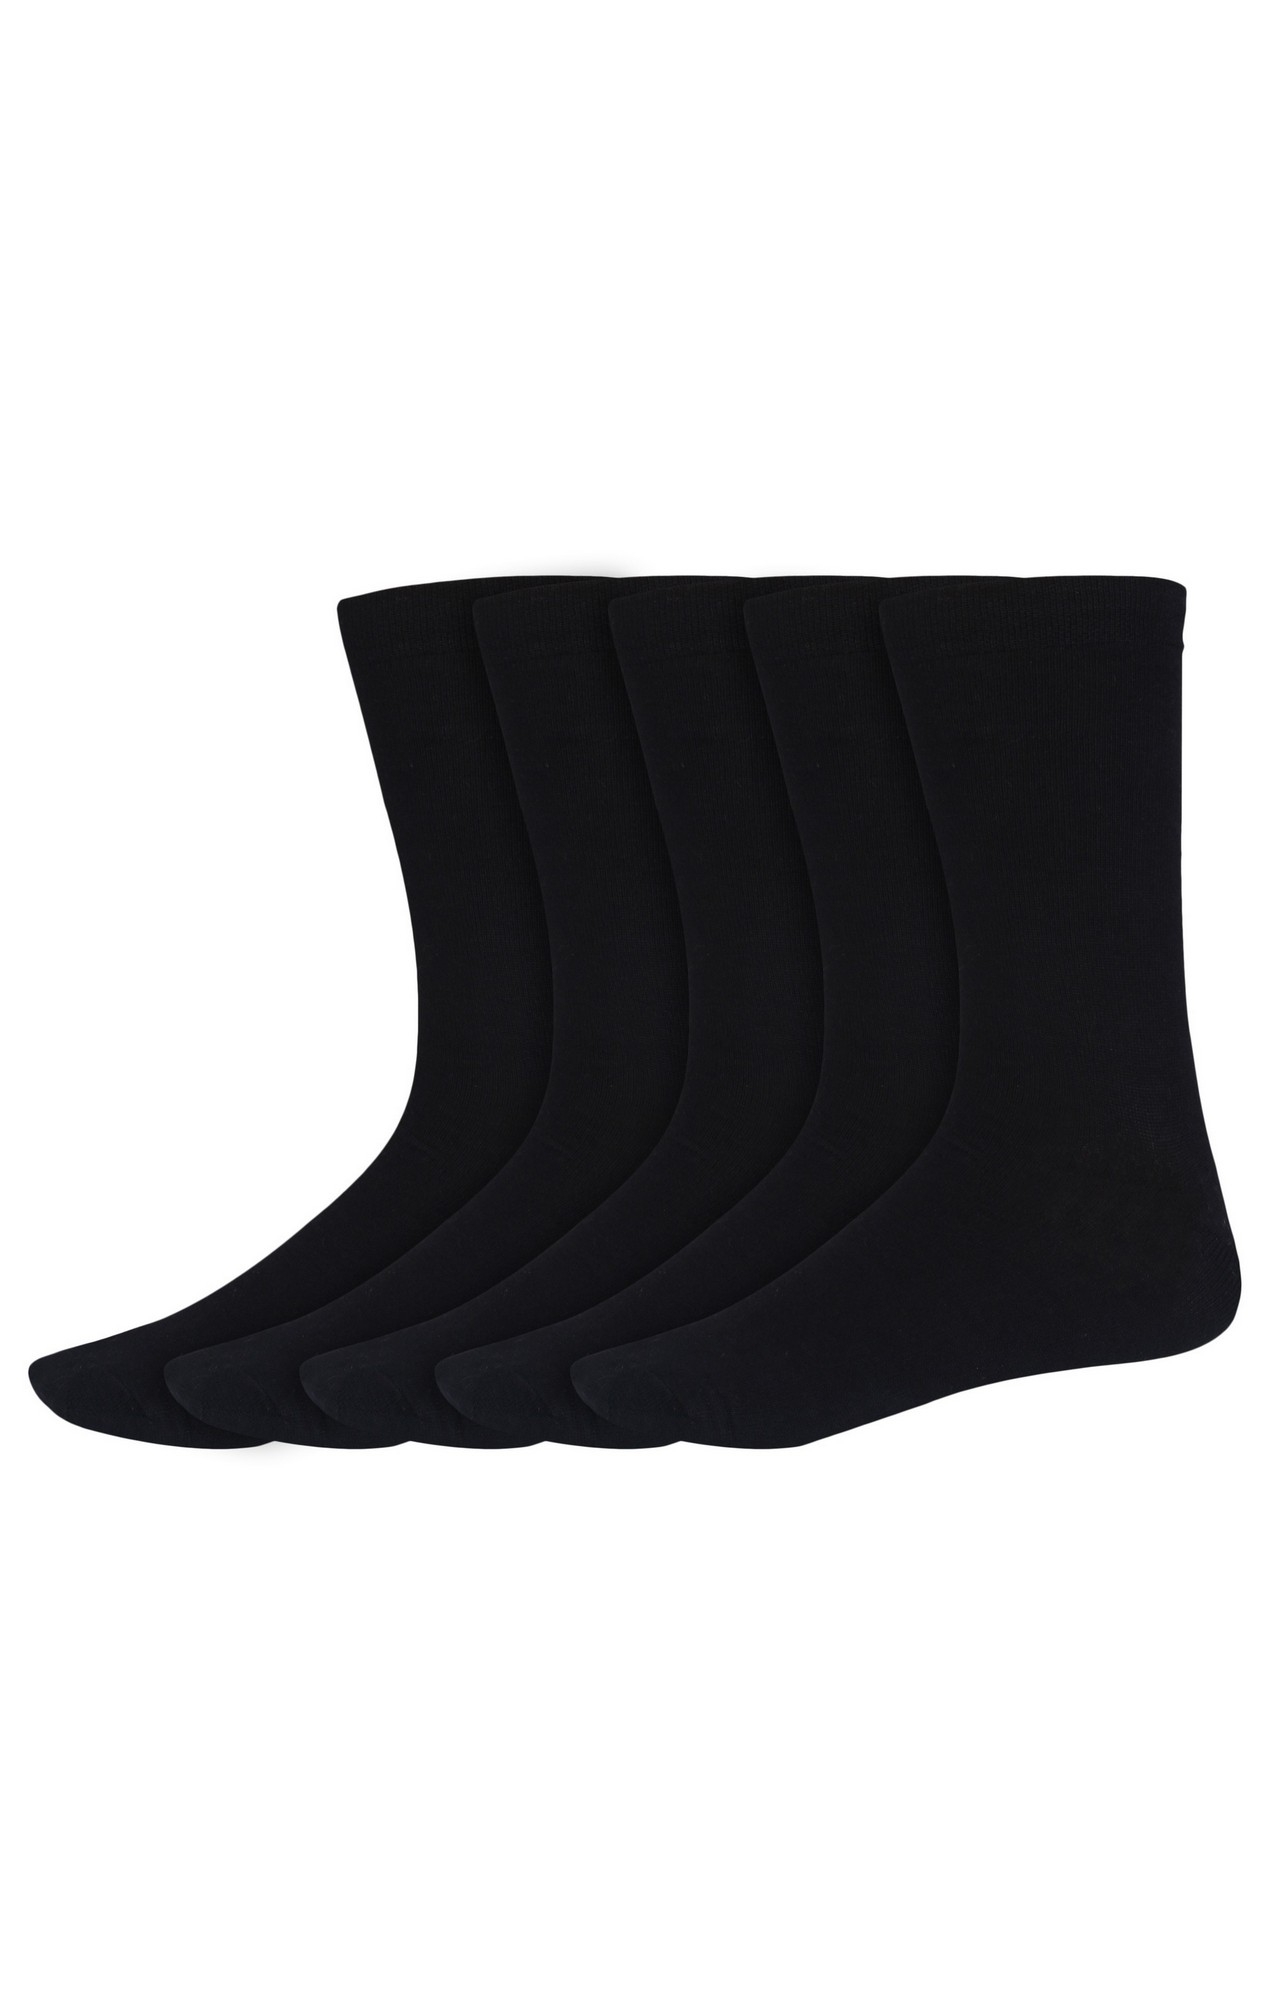 SIDEWOK | SIDEWOK Men Cotton Black Socks - Pack of 5